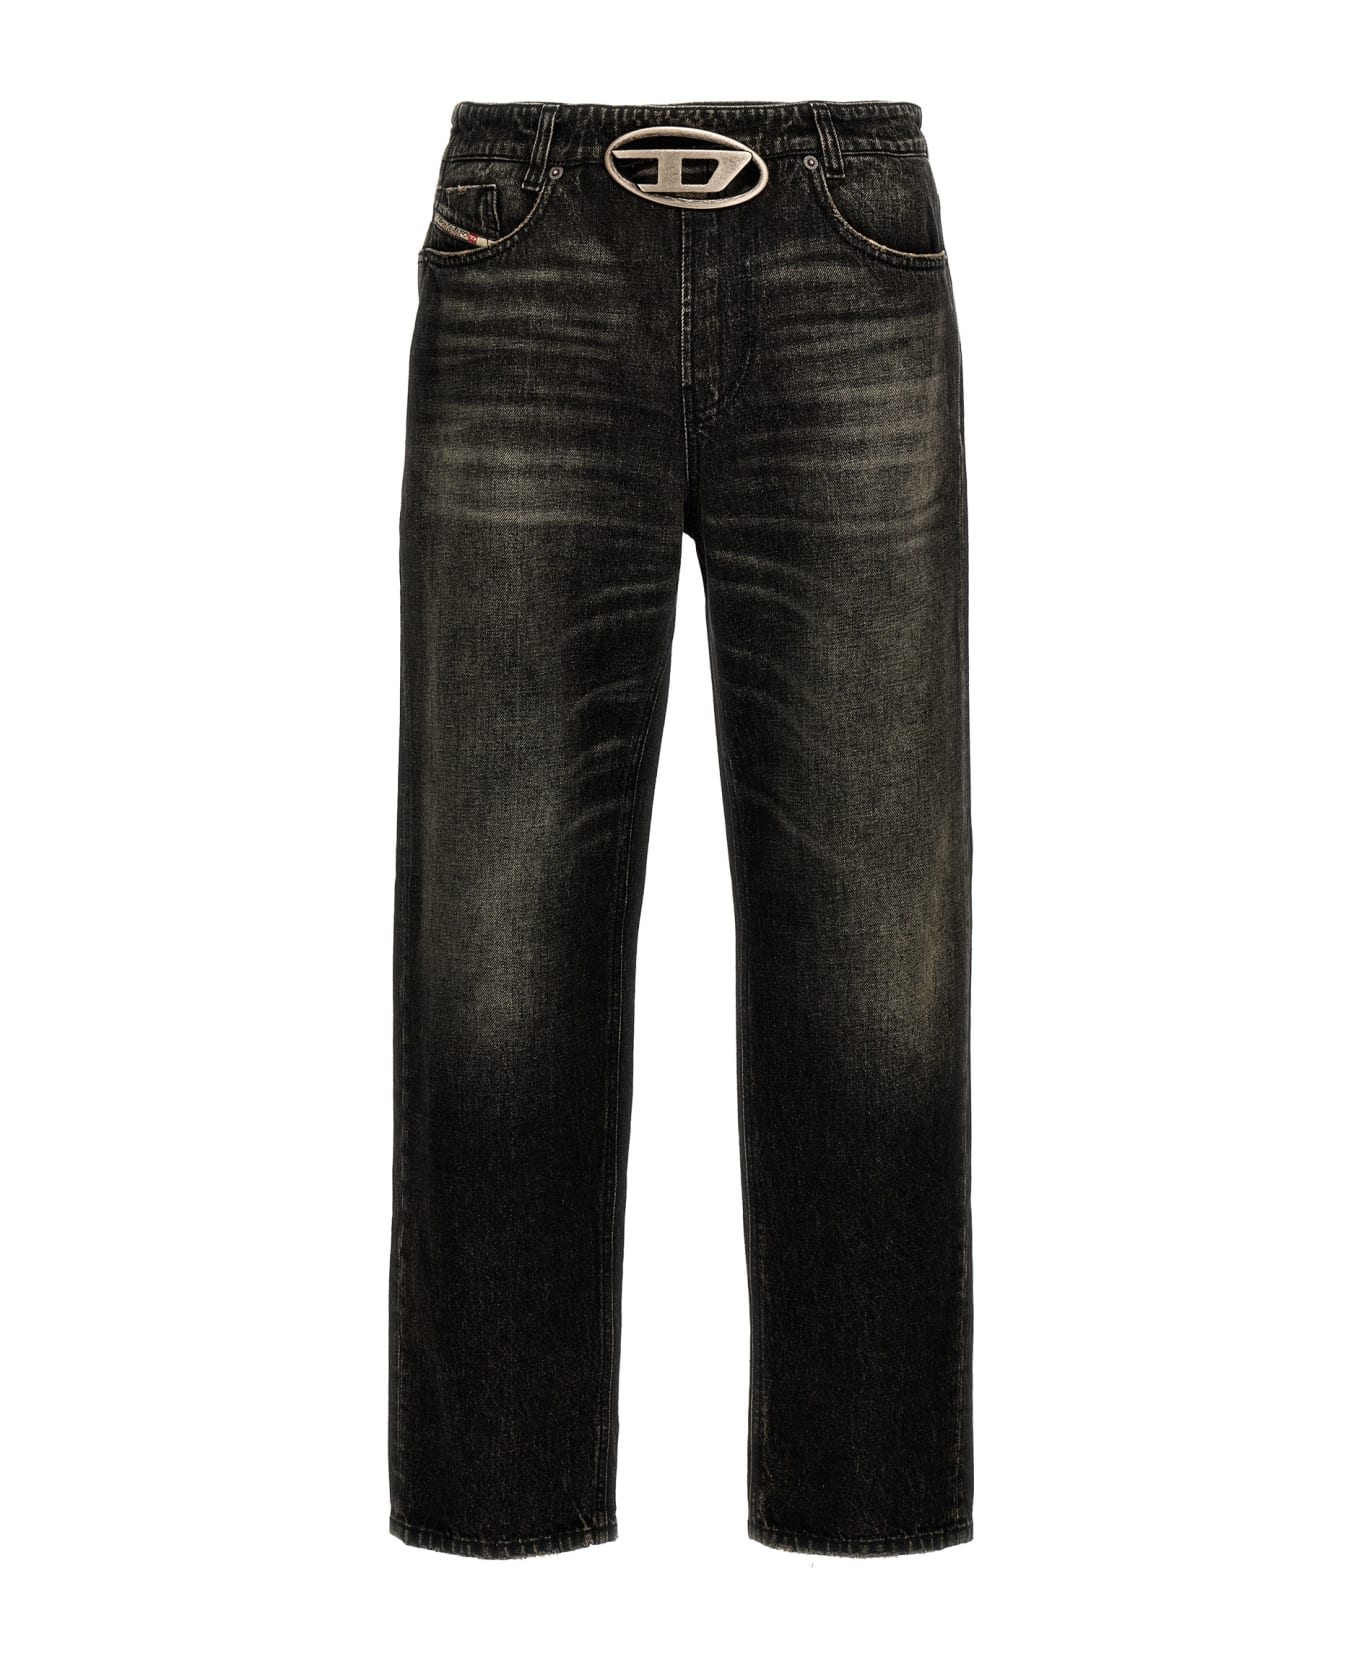 Diesel '2010 D-macs-s2' Jeans - Black   デニム